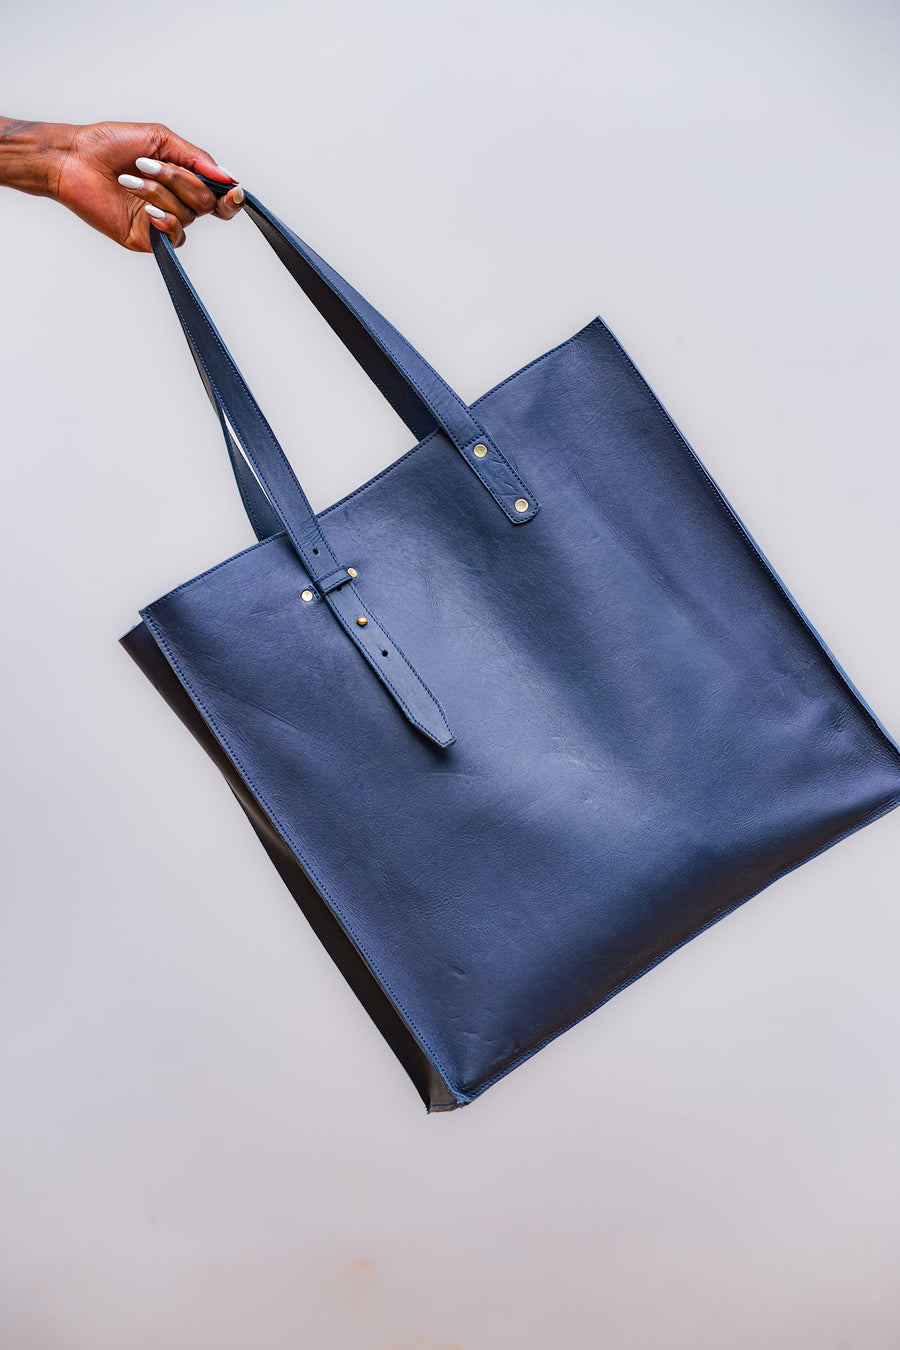 TUG Logo Double Strap Blue Leather Tote Bag